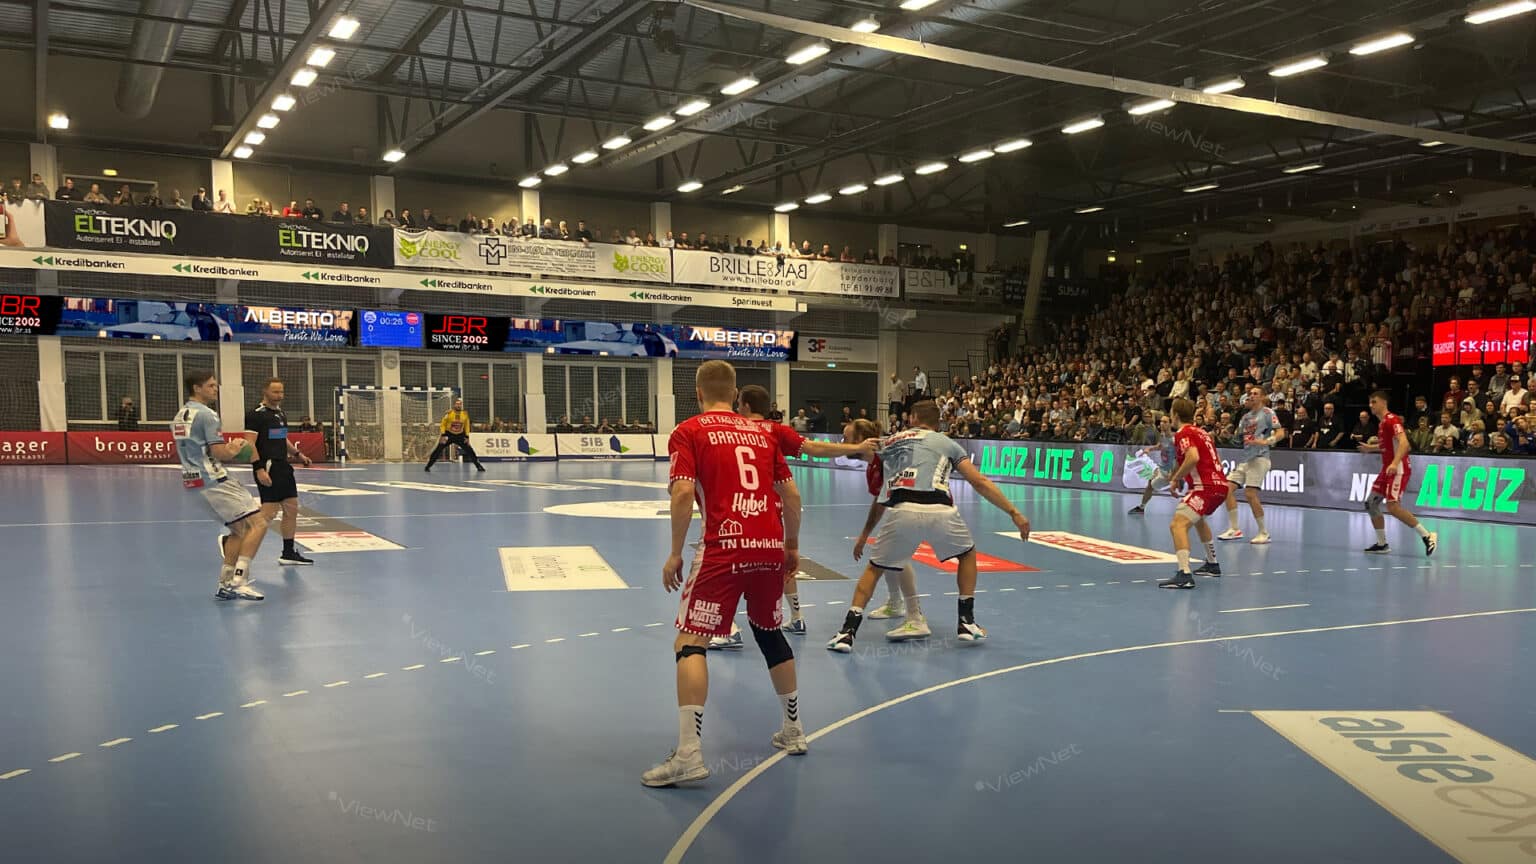 Sønderjyske herrehåndbold kamp i Skansen